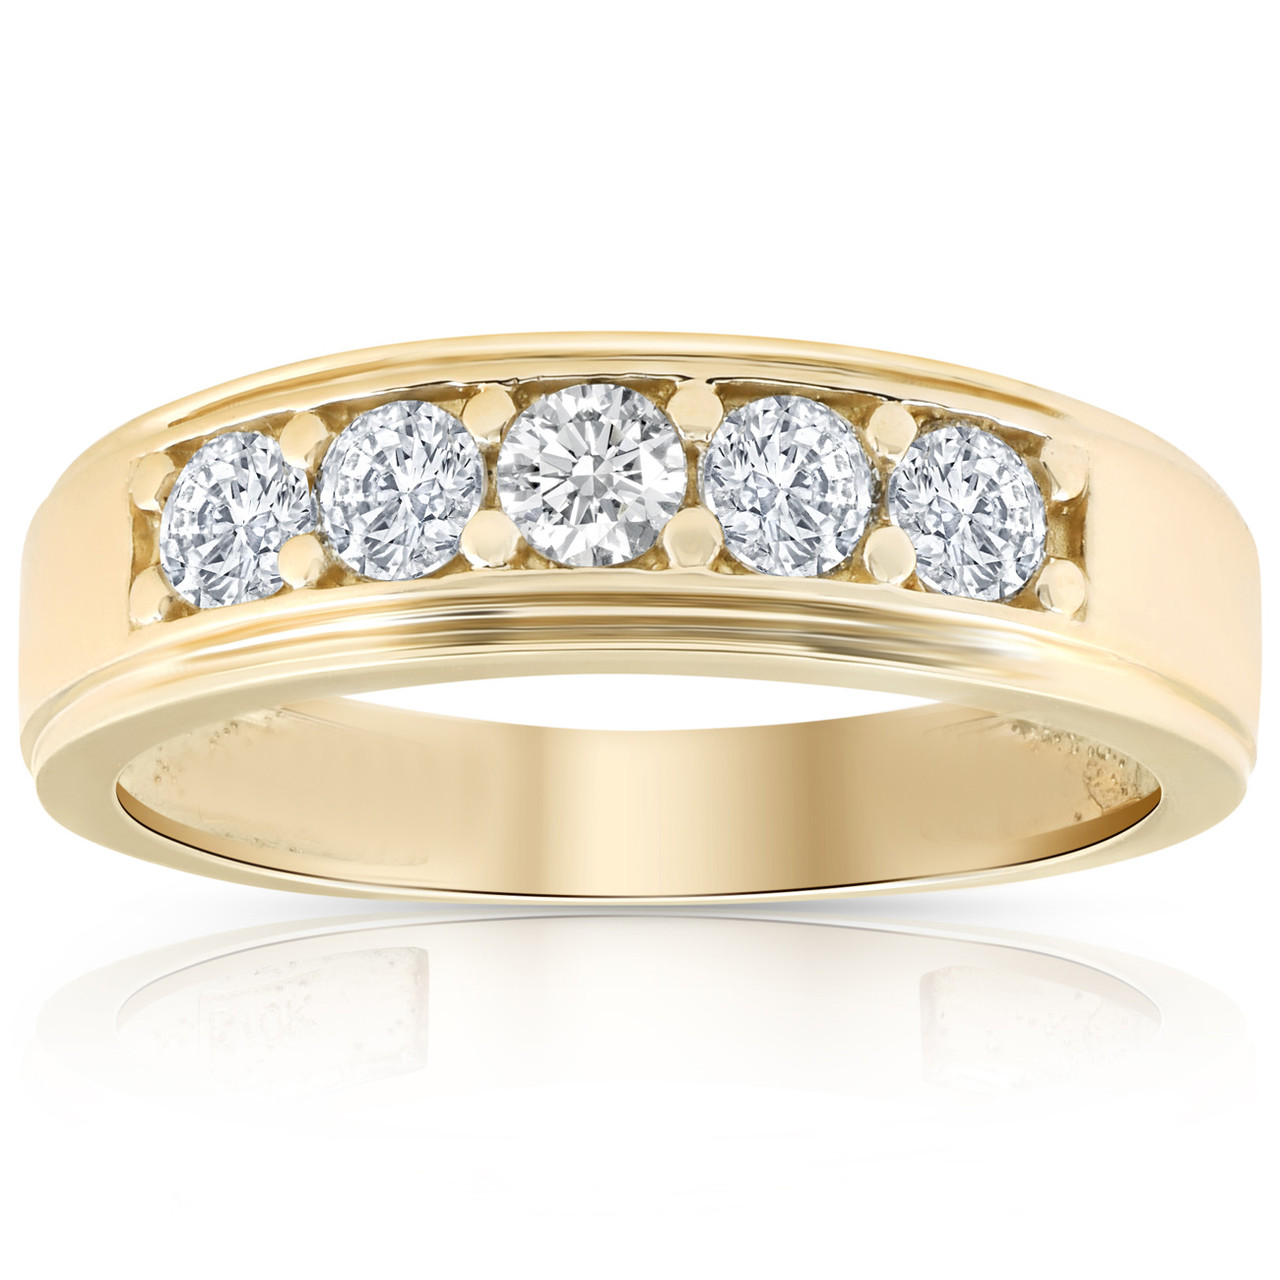 Pompeii3 1 ct Diamond Ring Mens High Polished 14K Yellow Gold Wedding Anniversary Band - Size 10